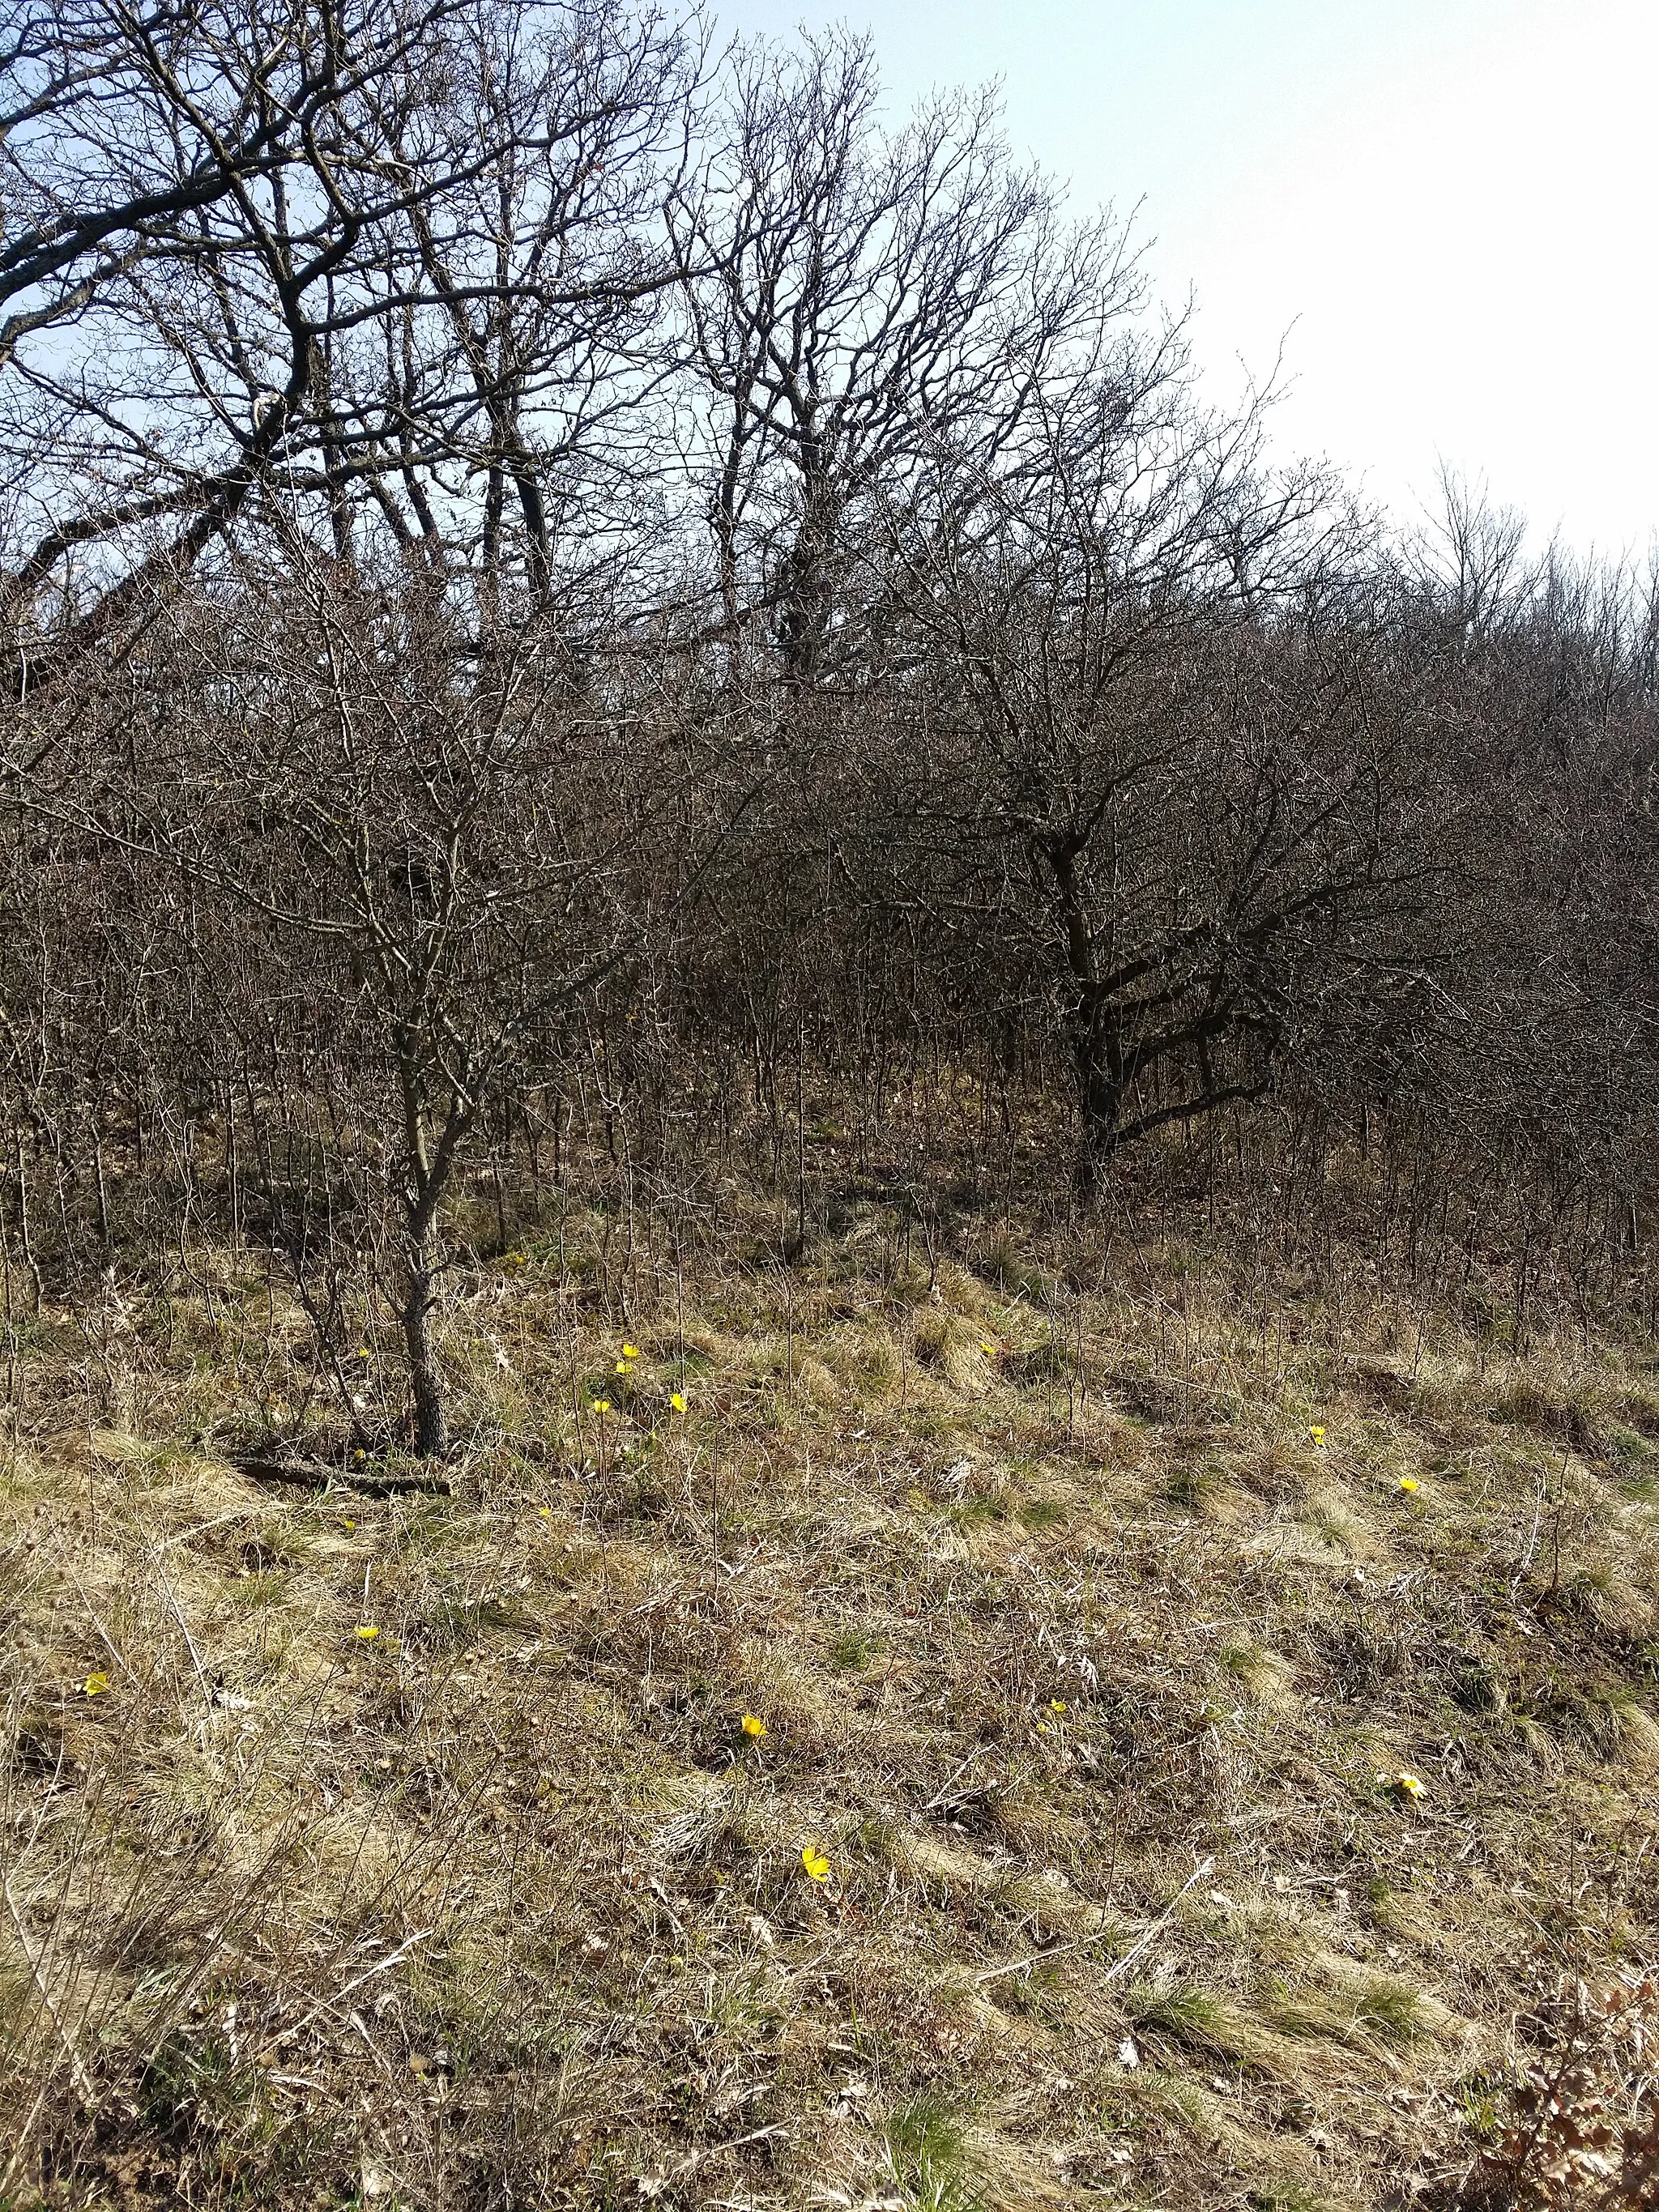 Photo showing: Habitat Taxonym: Adonis vernalis ss Fischer et al. EfÖLS 2008 ISBN 978-3-85474-187-9
Location: Burgstall near Haslach, district Hollabrunn, Lower Austria - ca. 350 m a.s.l.
Habitat: calcareous semi-dry grassland